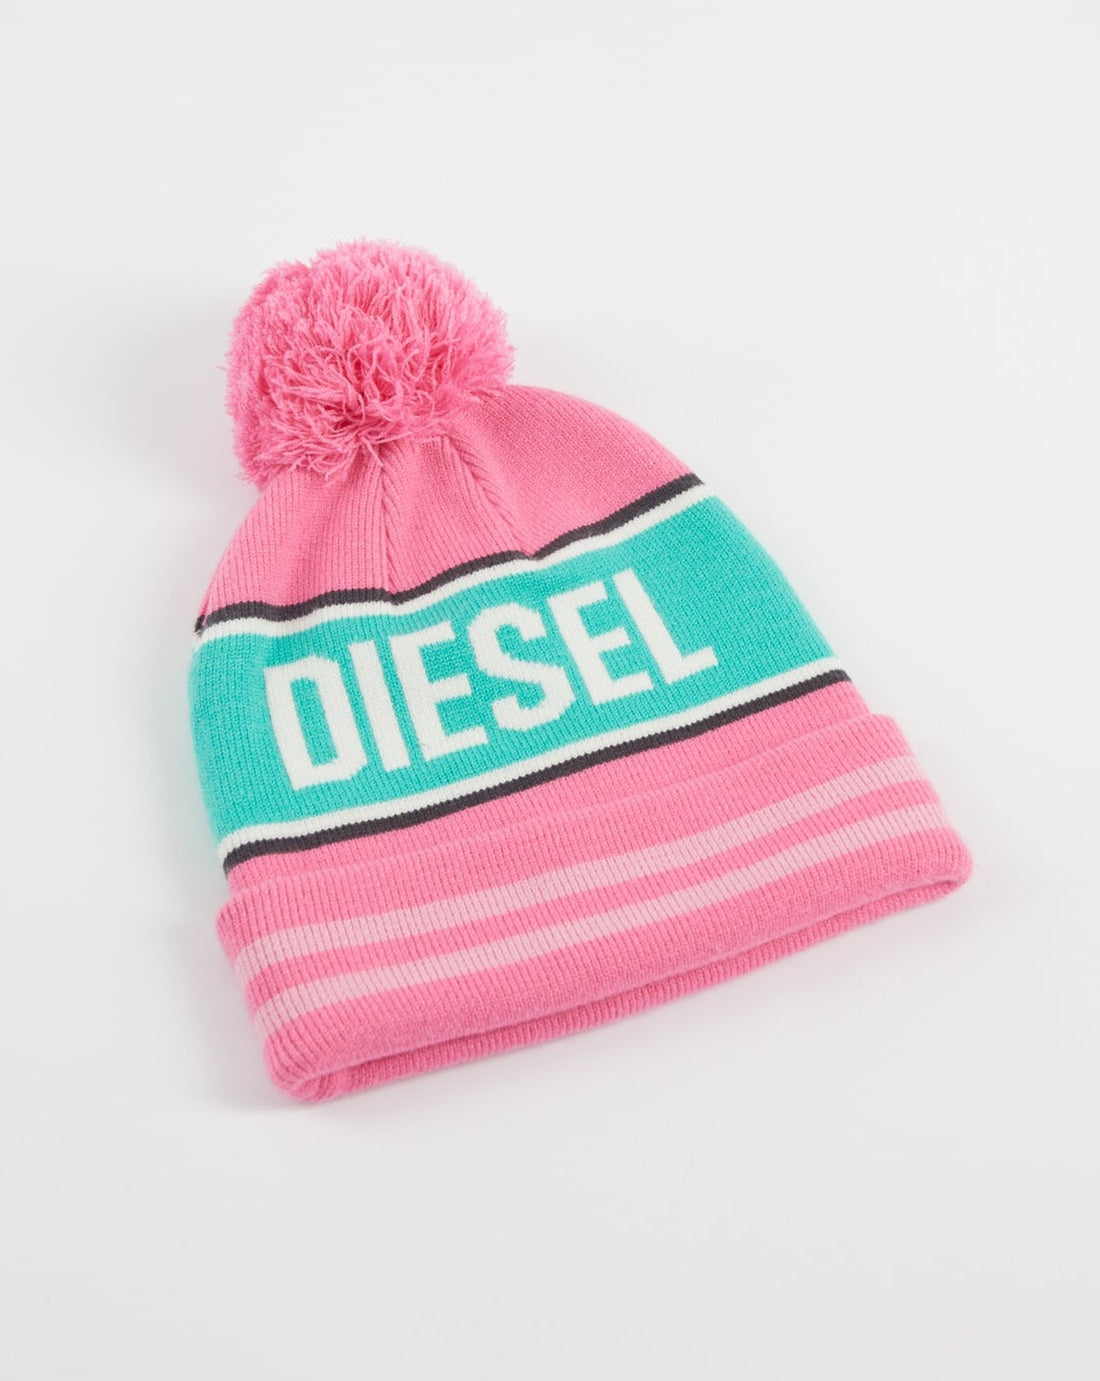 Diesel Nika Hat - Candy Pink